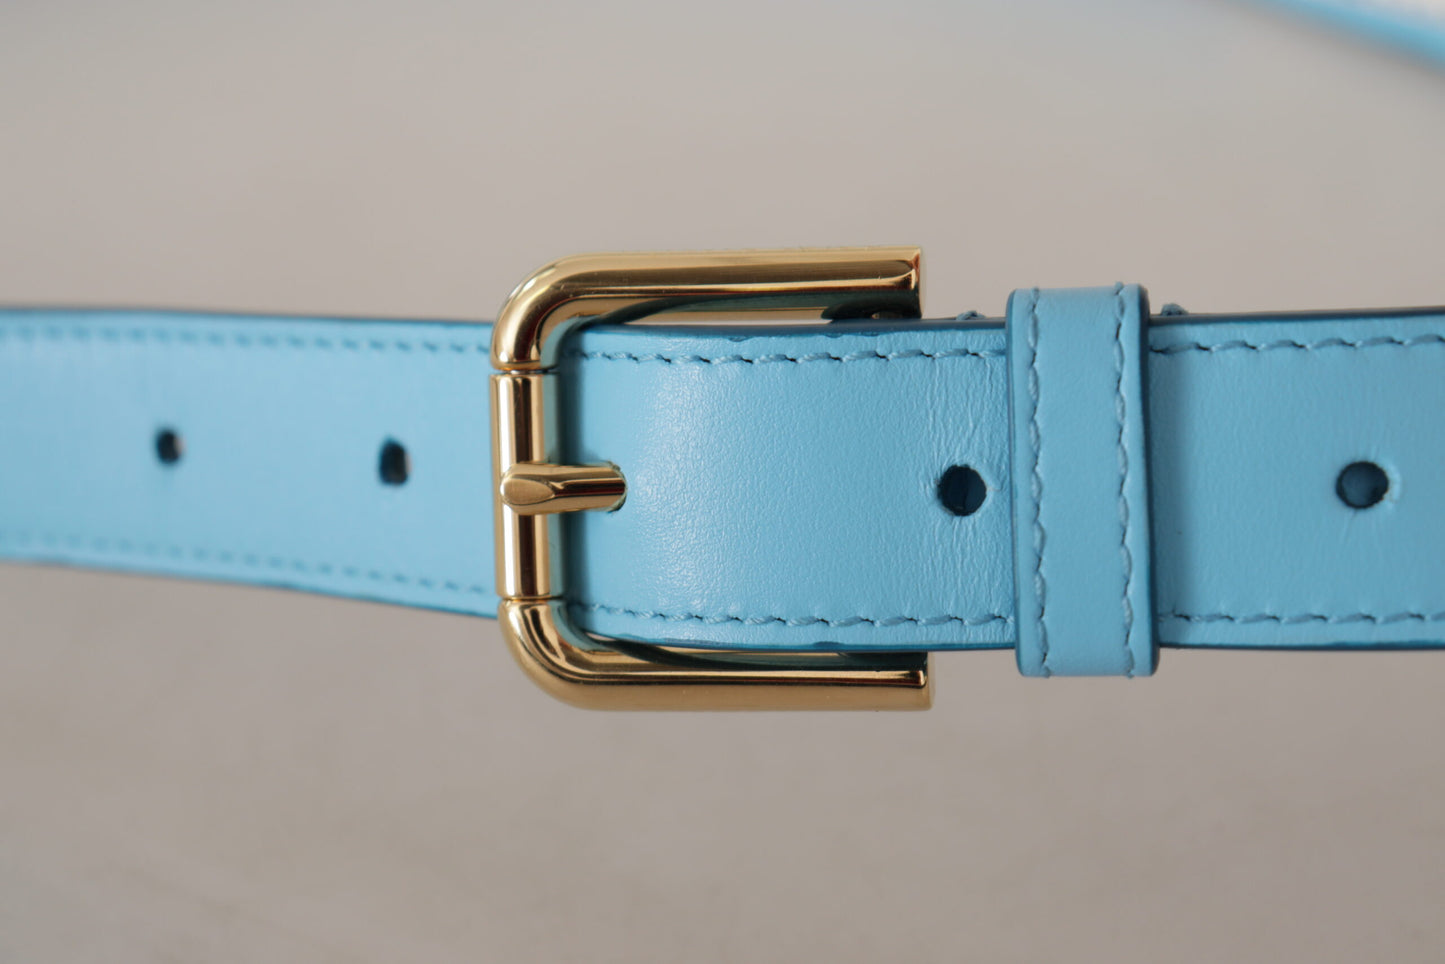 Dolce &amp; Gabbana Sky Blue Leather Gold Tone Metal Logo Buckle Belt